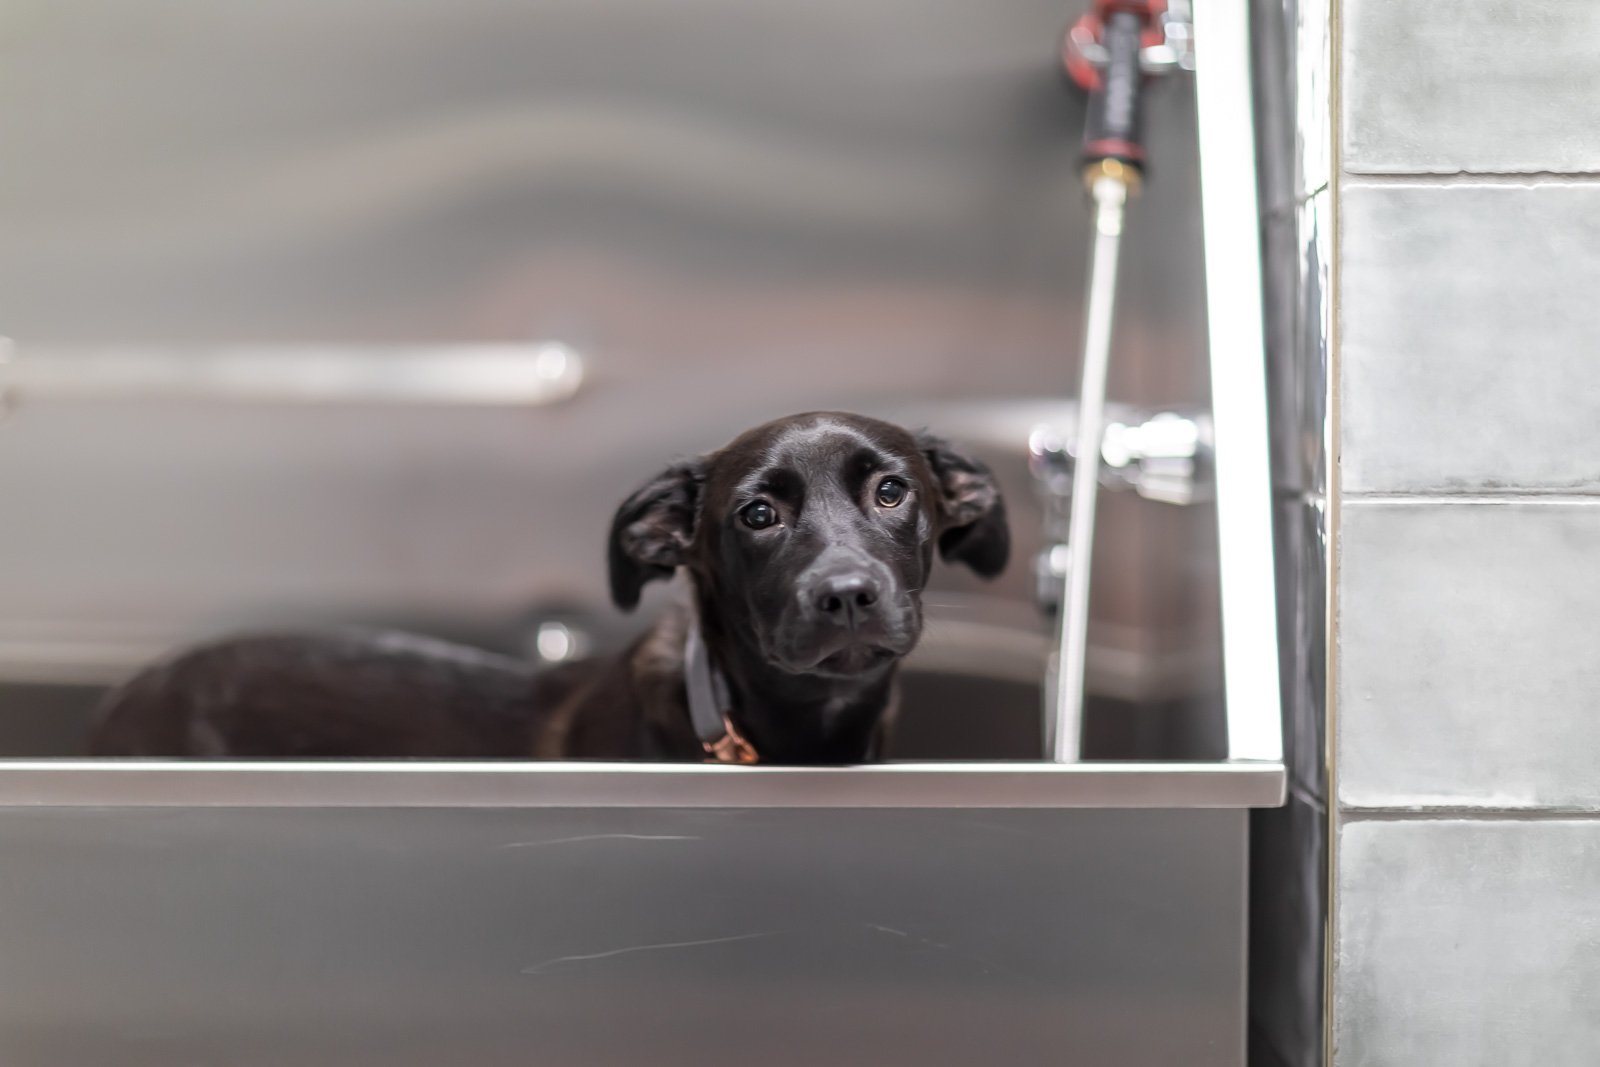 Dog at pet wash station